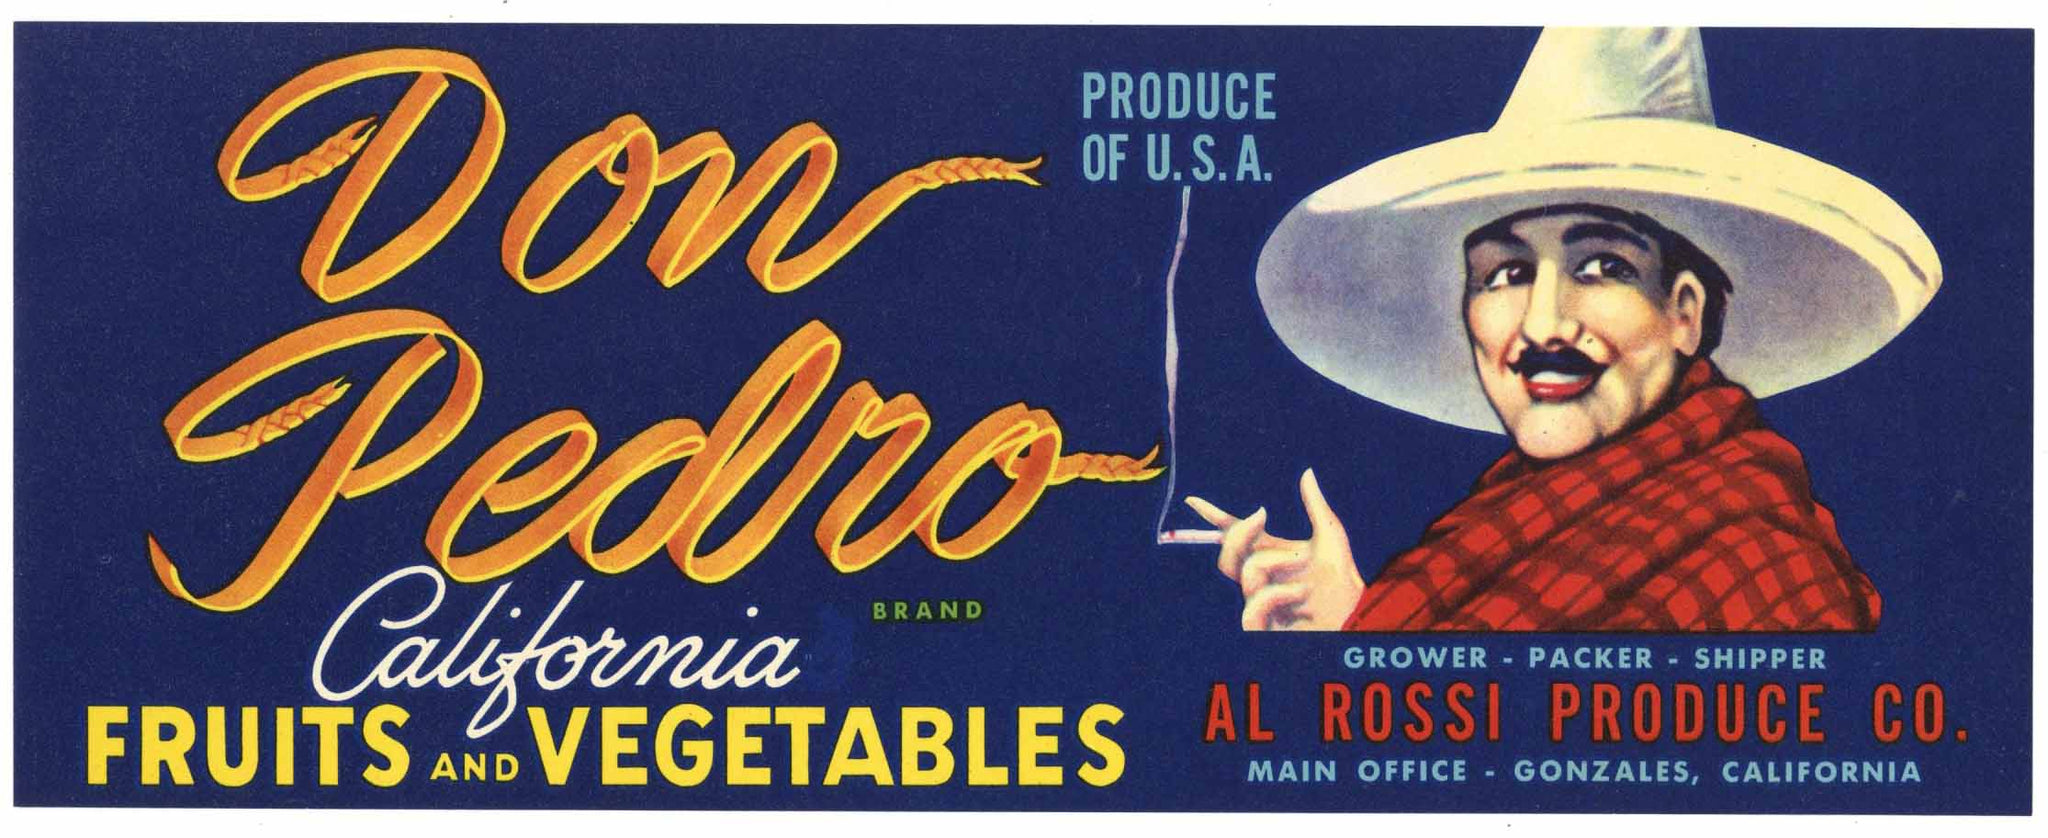 Don Pedro Brand Vintage Gonzales California Melon Crate Label